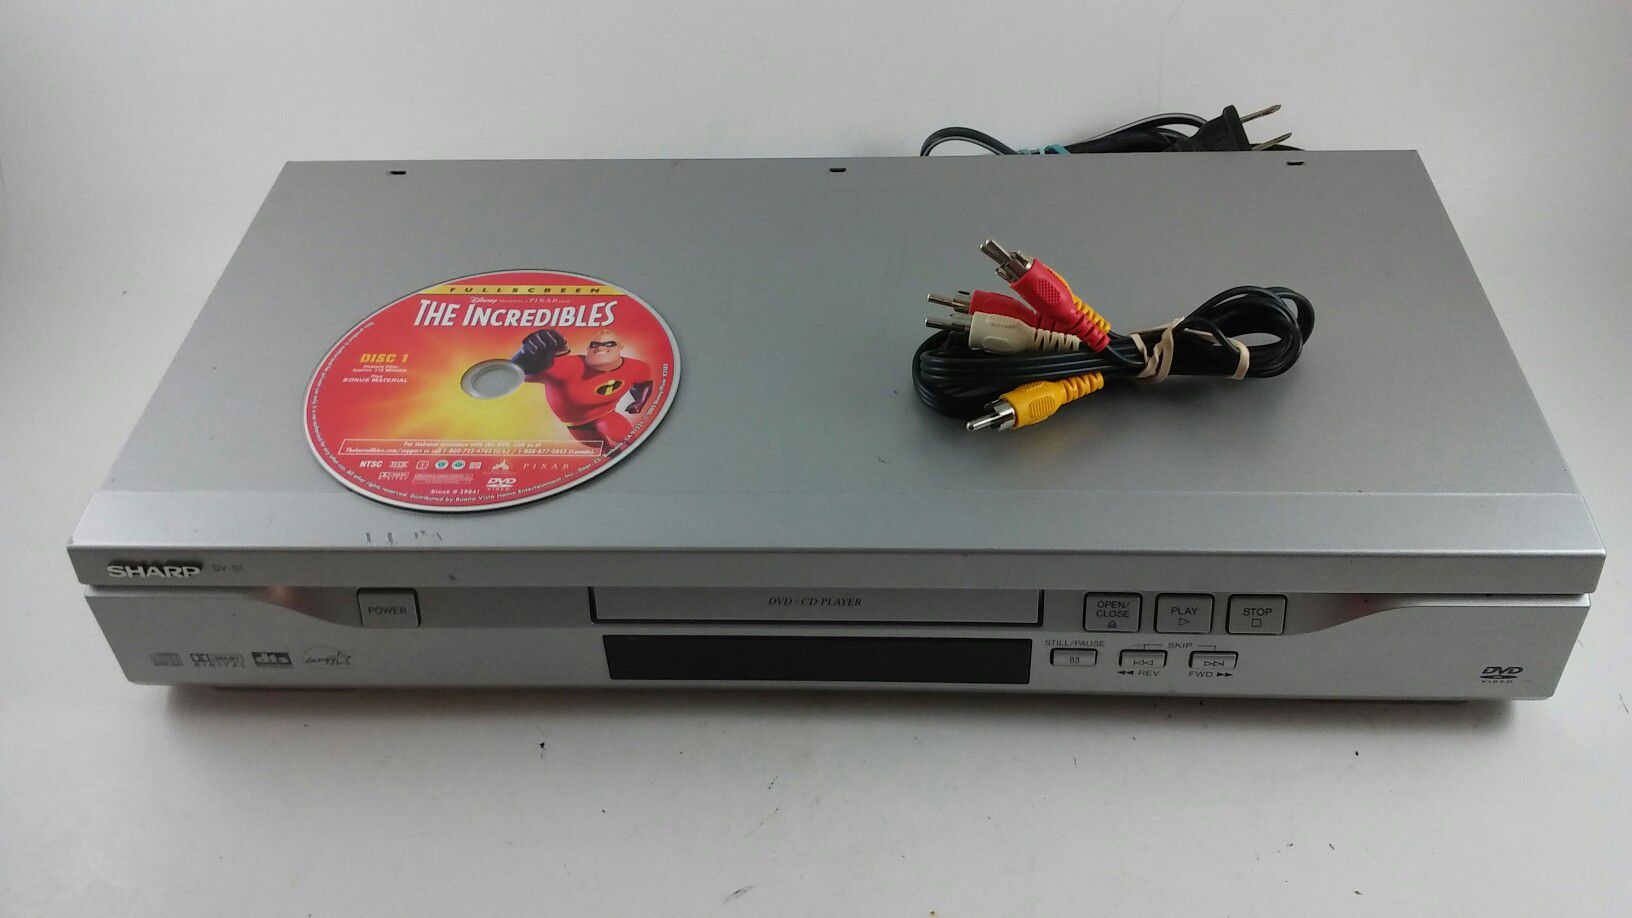 Sharp DV-S1U DVD/CD Player with Movie DVD Incredible